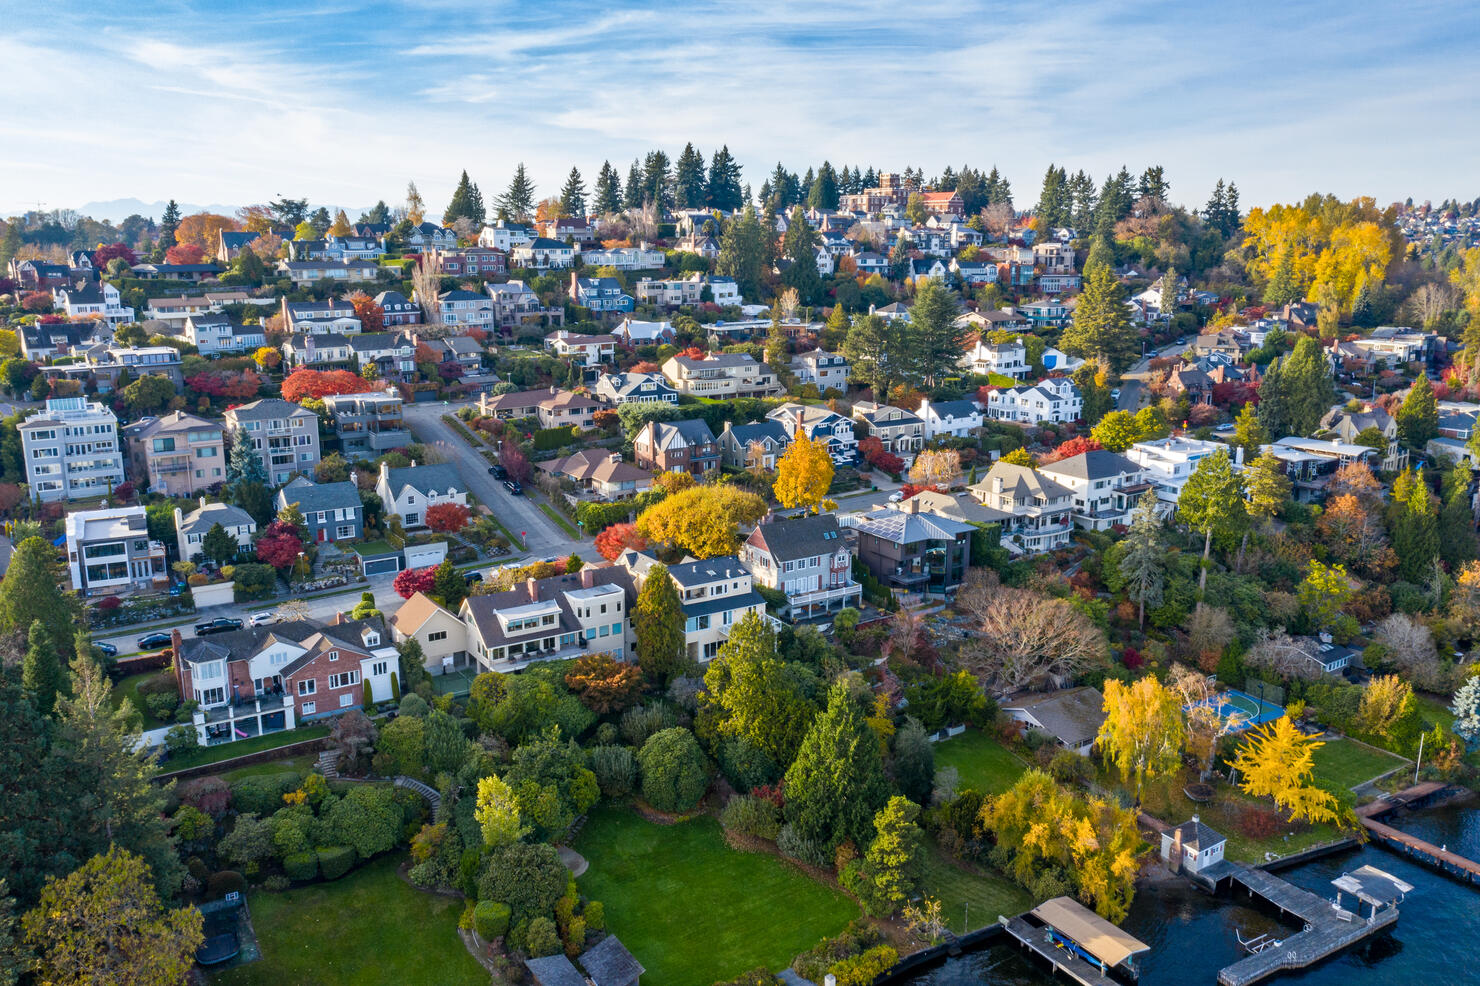 Laurelhurst Neighborhood in Seattle